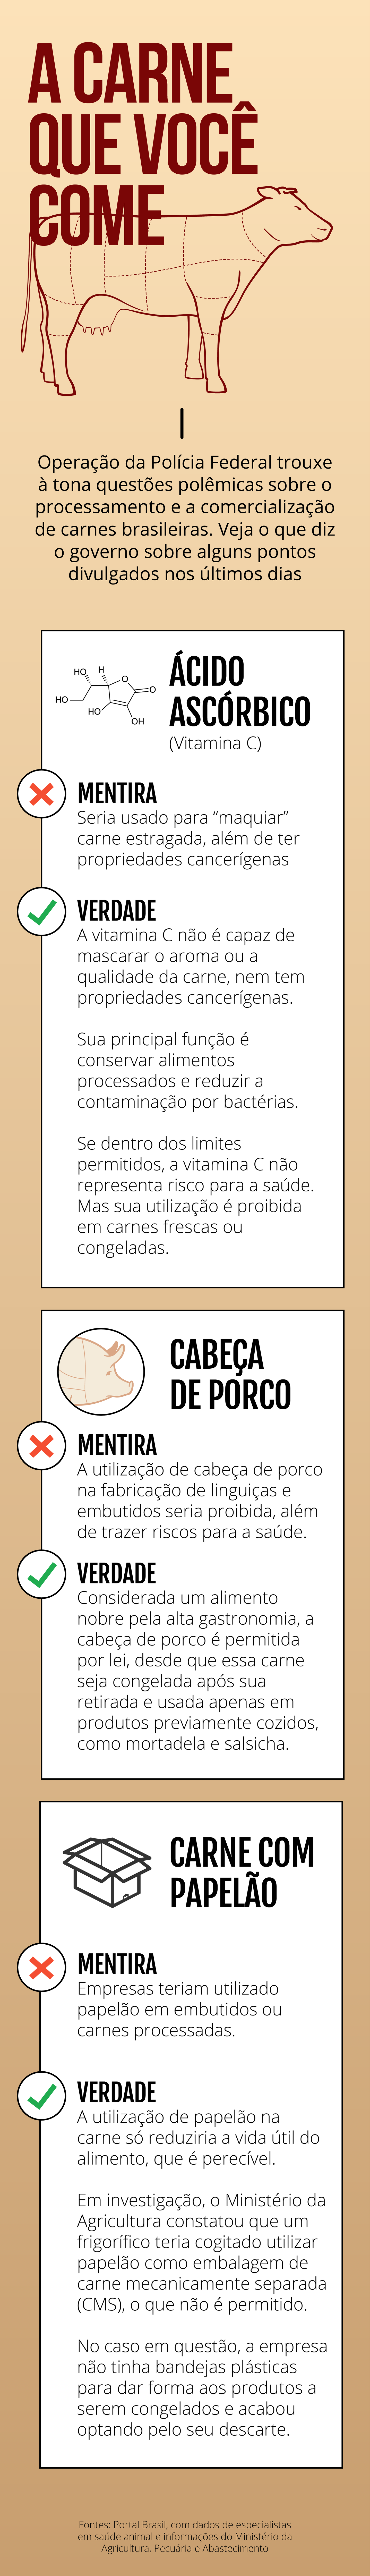 Verdades e mentiras sobre a carne brasileira